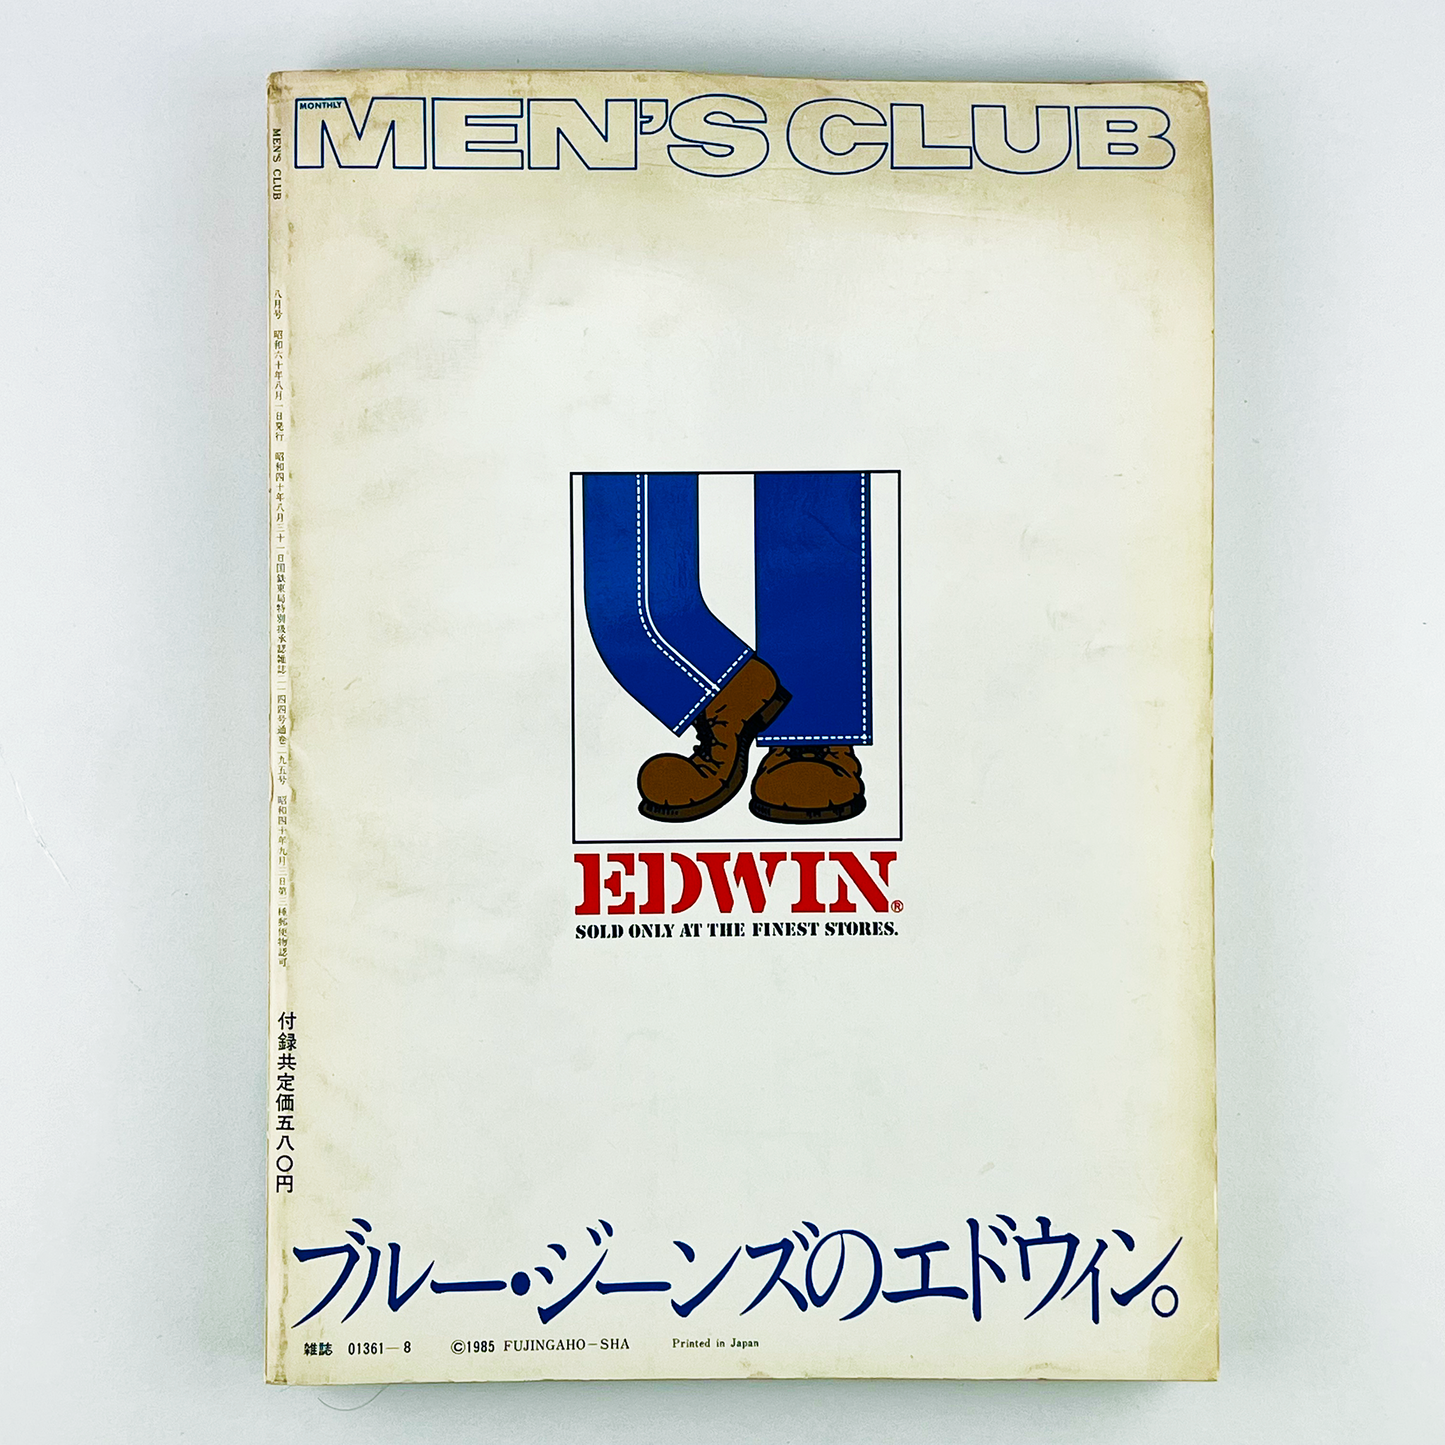 MEN'S CLUB 8月号 NO.295 昭和60年8月｜メンズクラブ編集部　